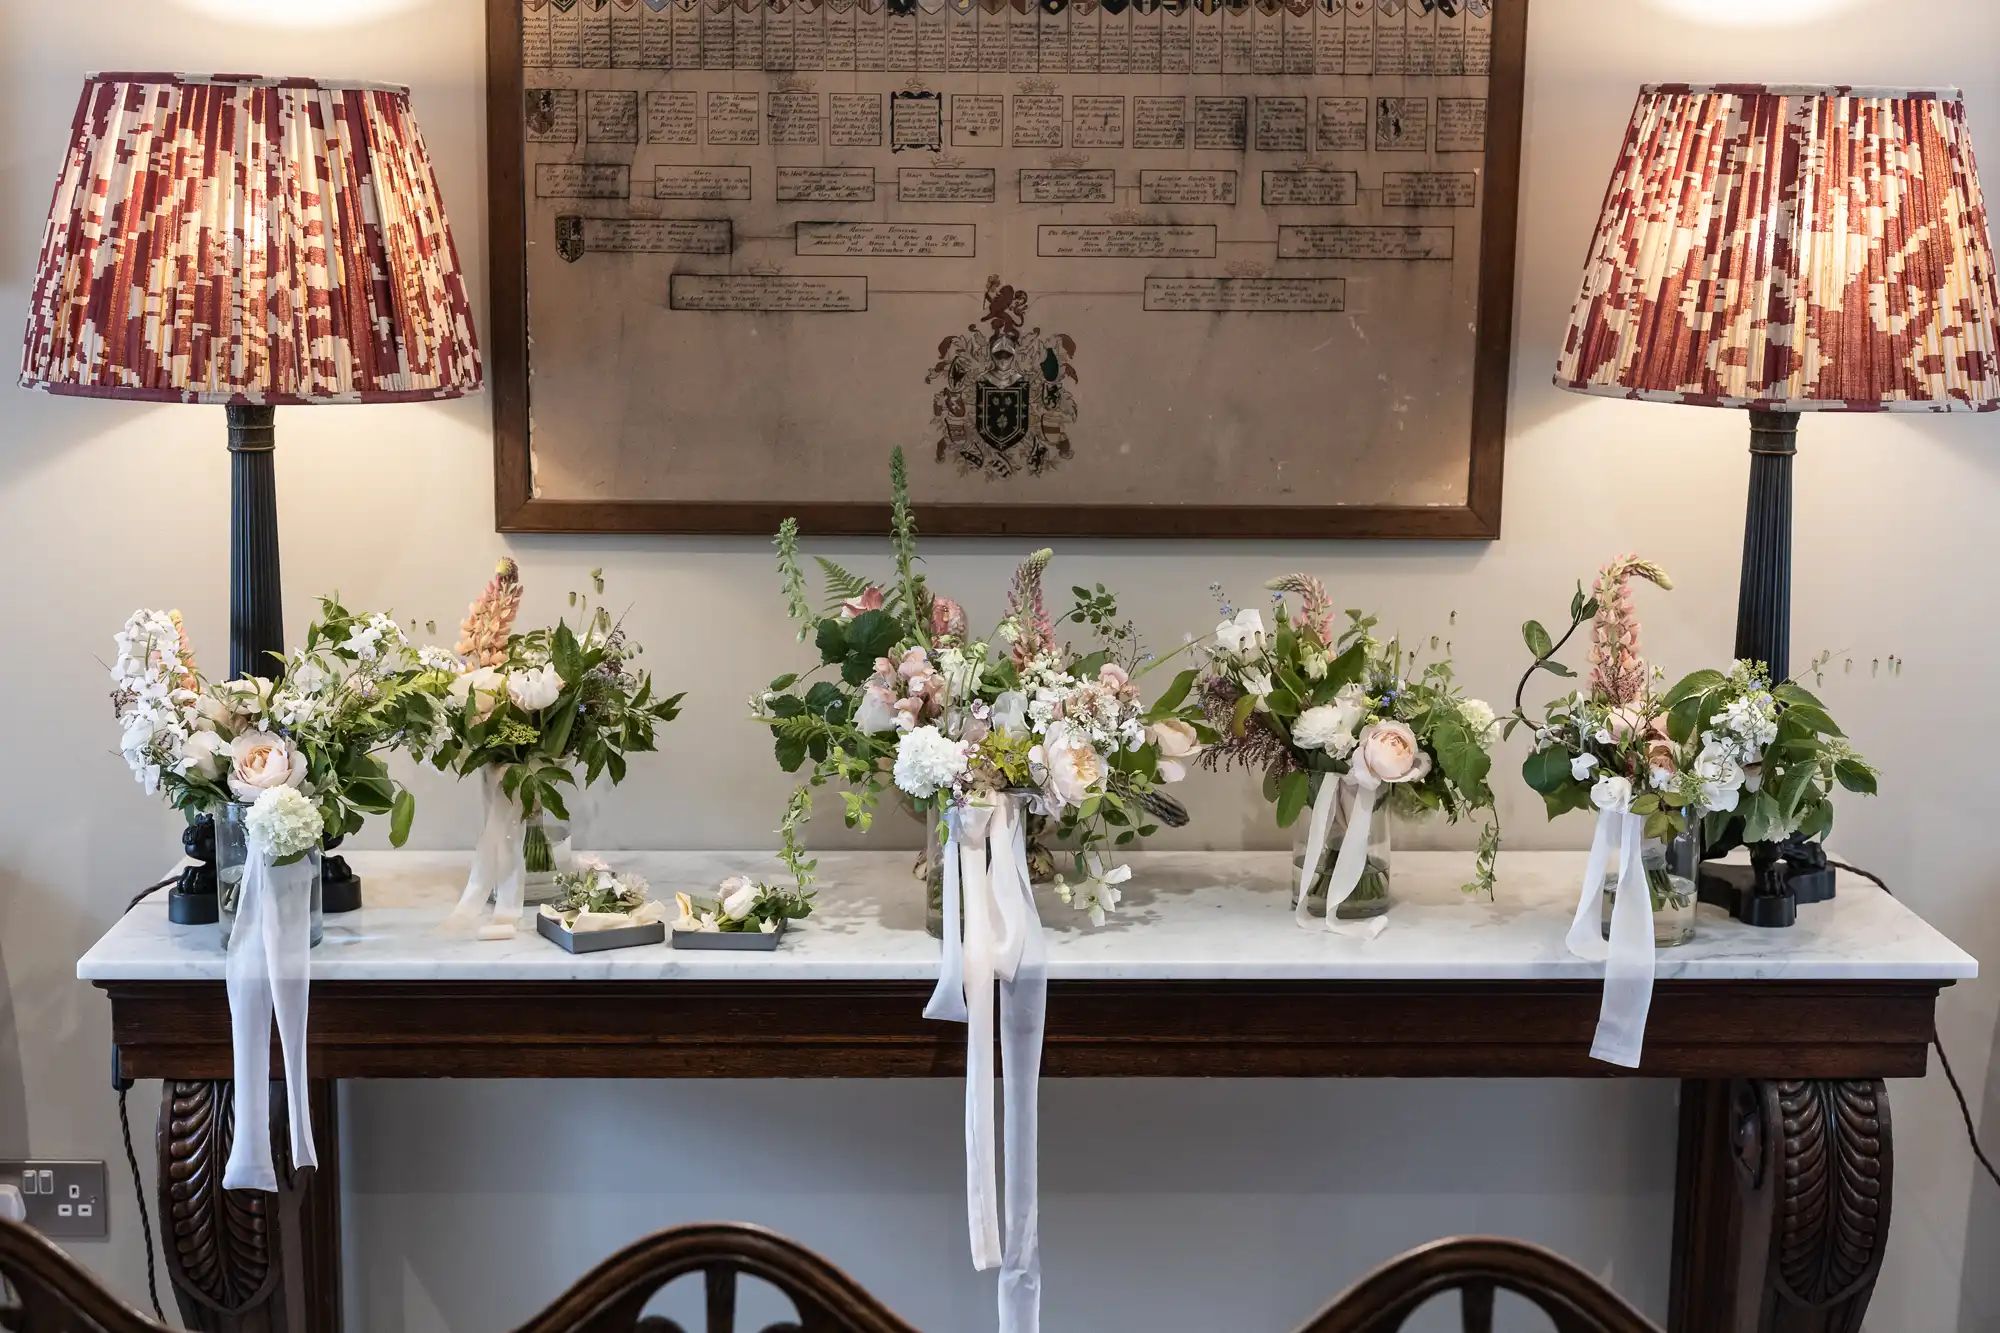 Elegant floral arrangements on a mantelpiece flanked by two lamps, under a framed heraldic emblem.